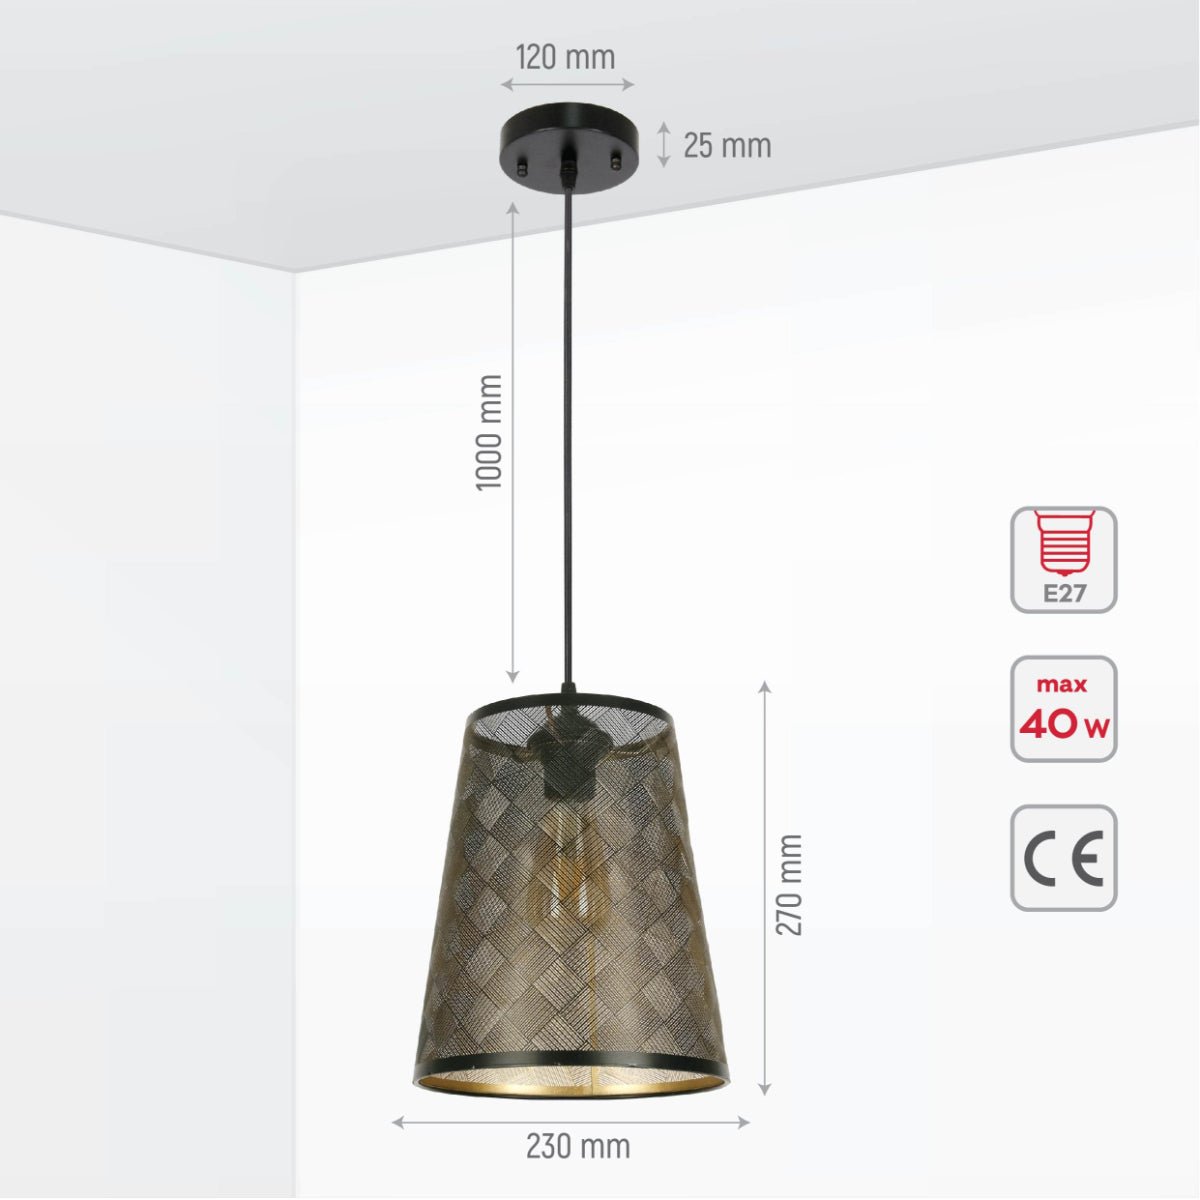 Size and specs of Black-Golden Metal Frustum Pendant Ceiling Light with E27 | TEKLED 150-17986